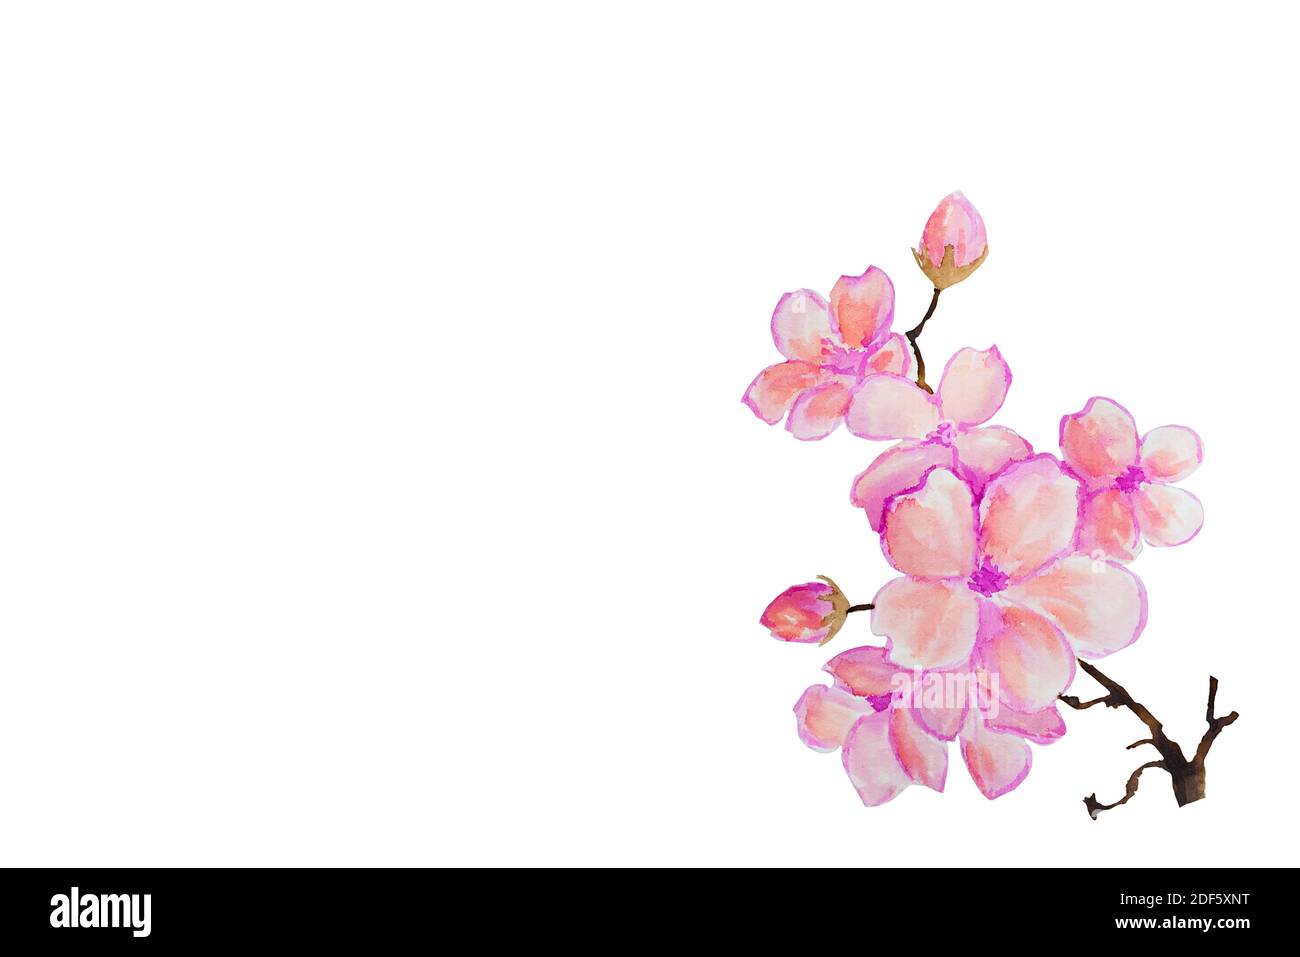 Cherry blossom, sakura flowers isolated on white background. Pink bloosoms. Stock Photo